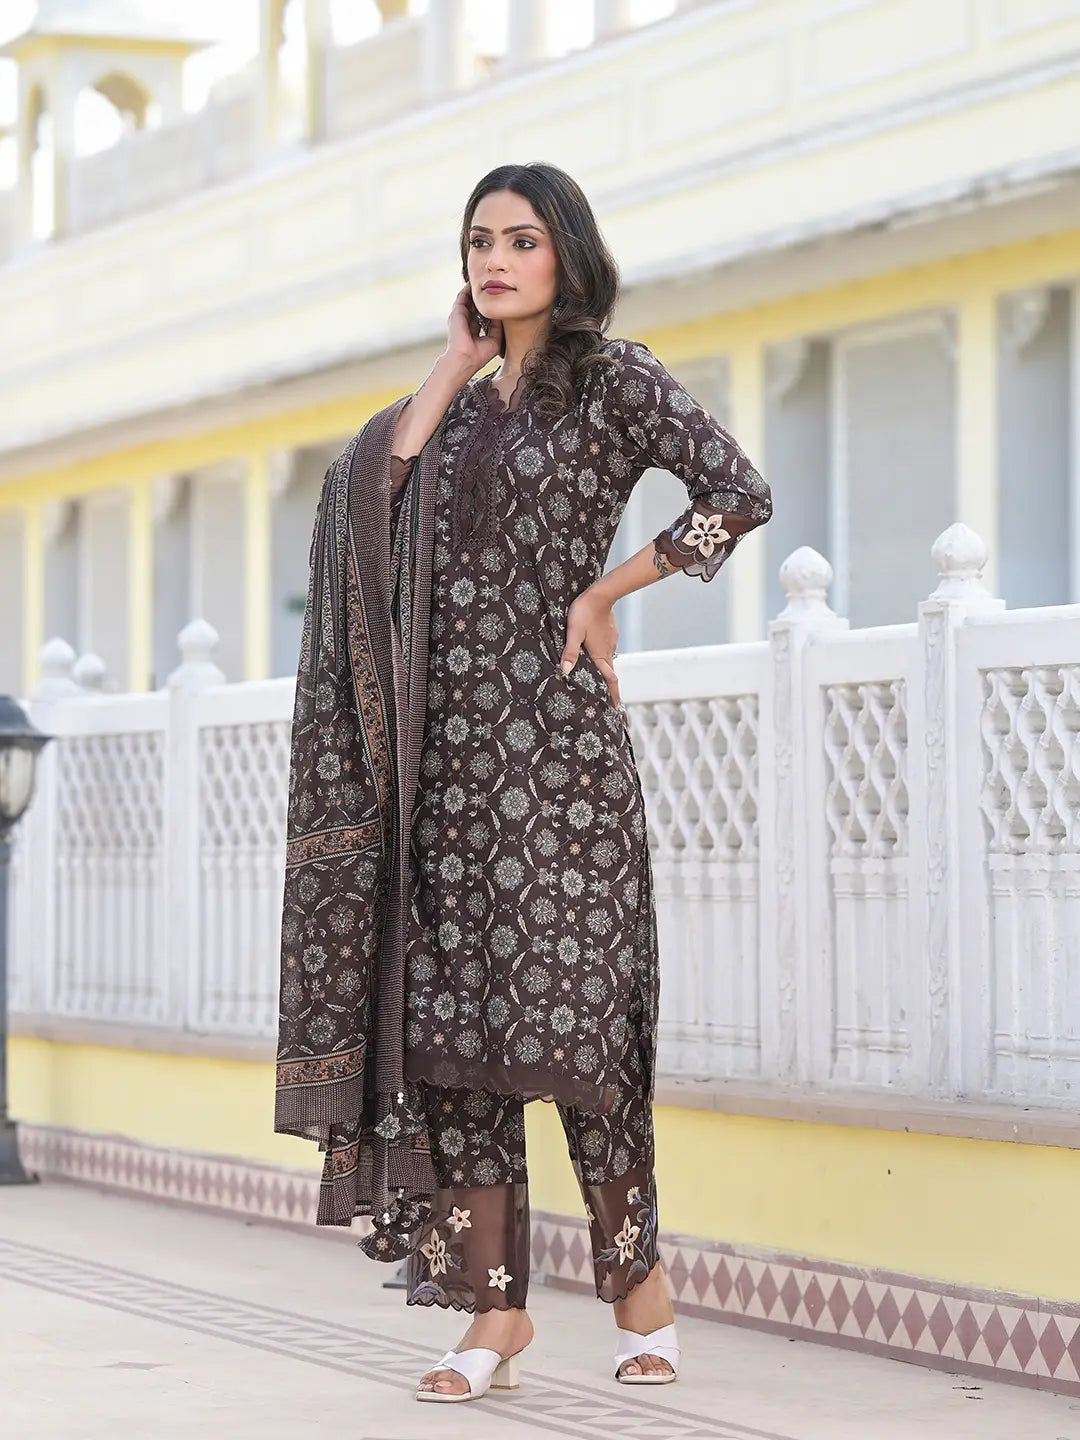 Brown Ethnic Motifs Pakistani Style Kurta Trouser And Dupatta Set-Yufta Store-6888SKDBRM